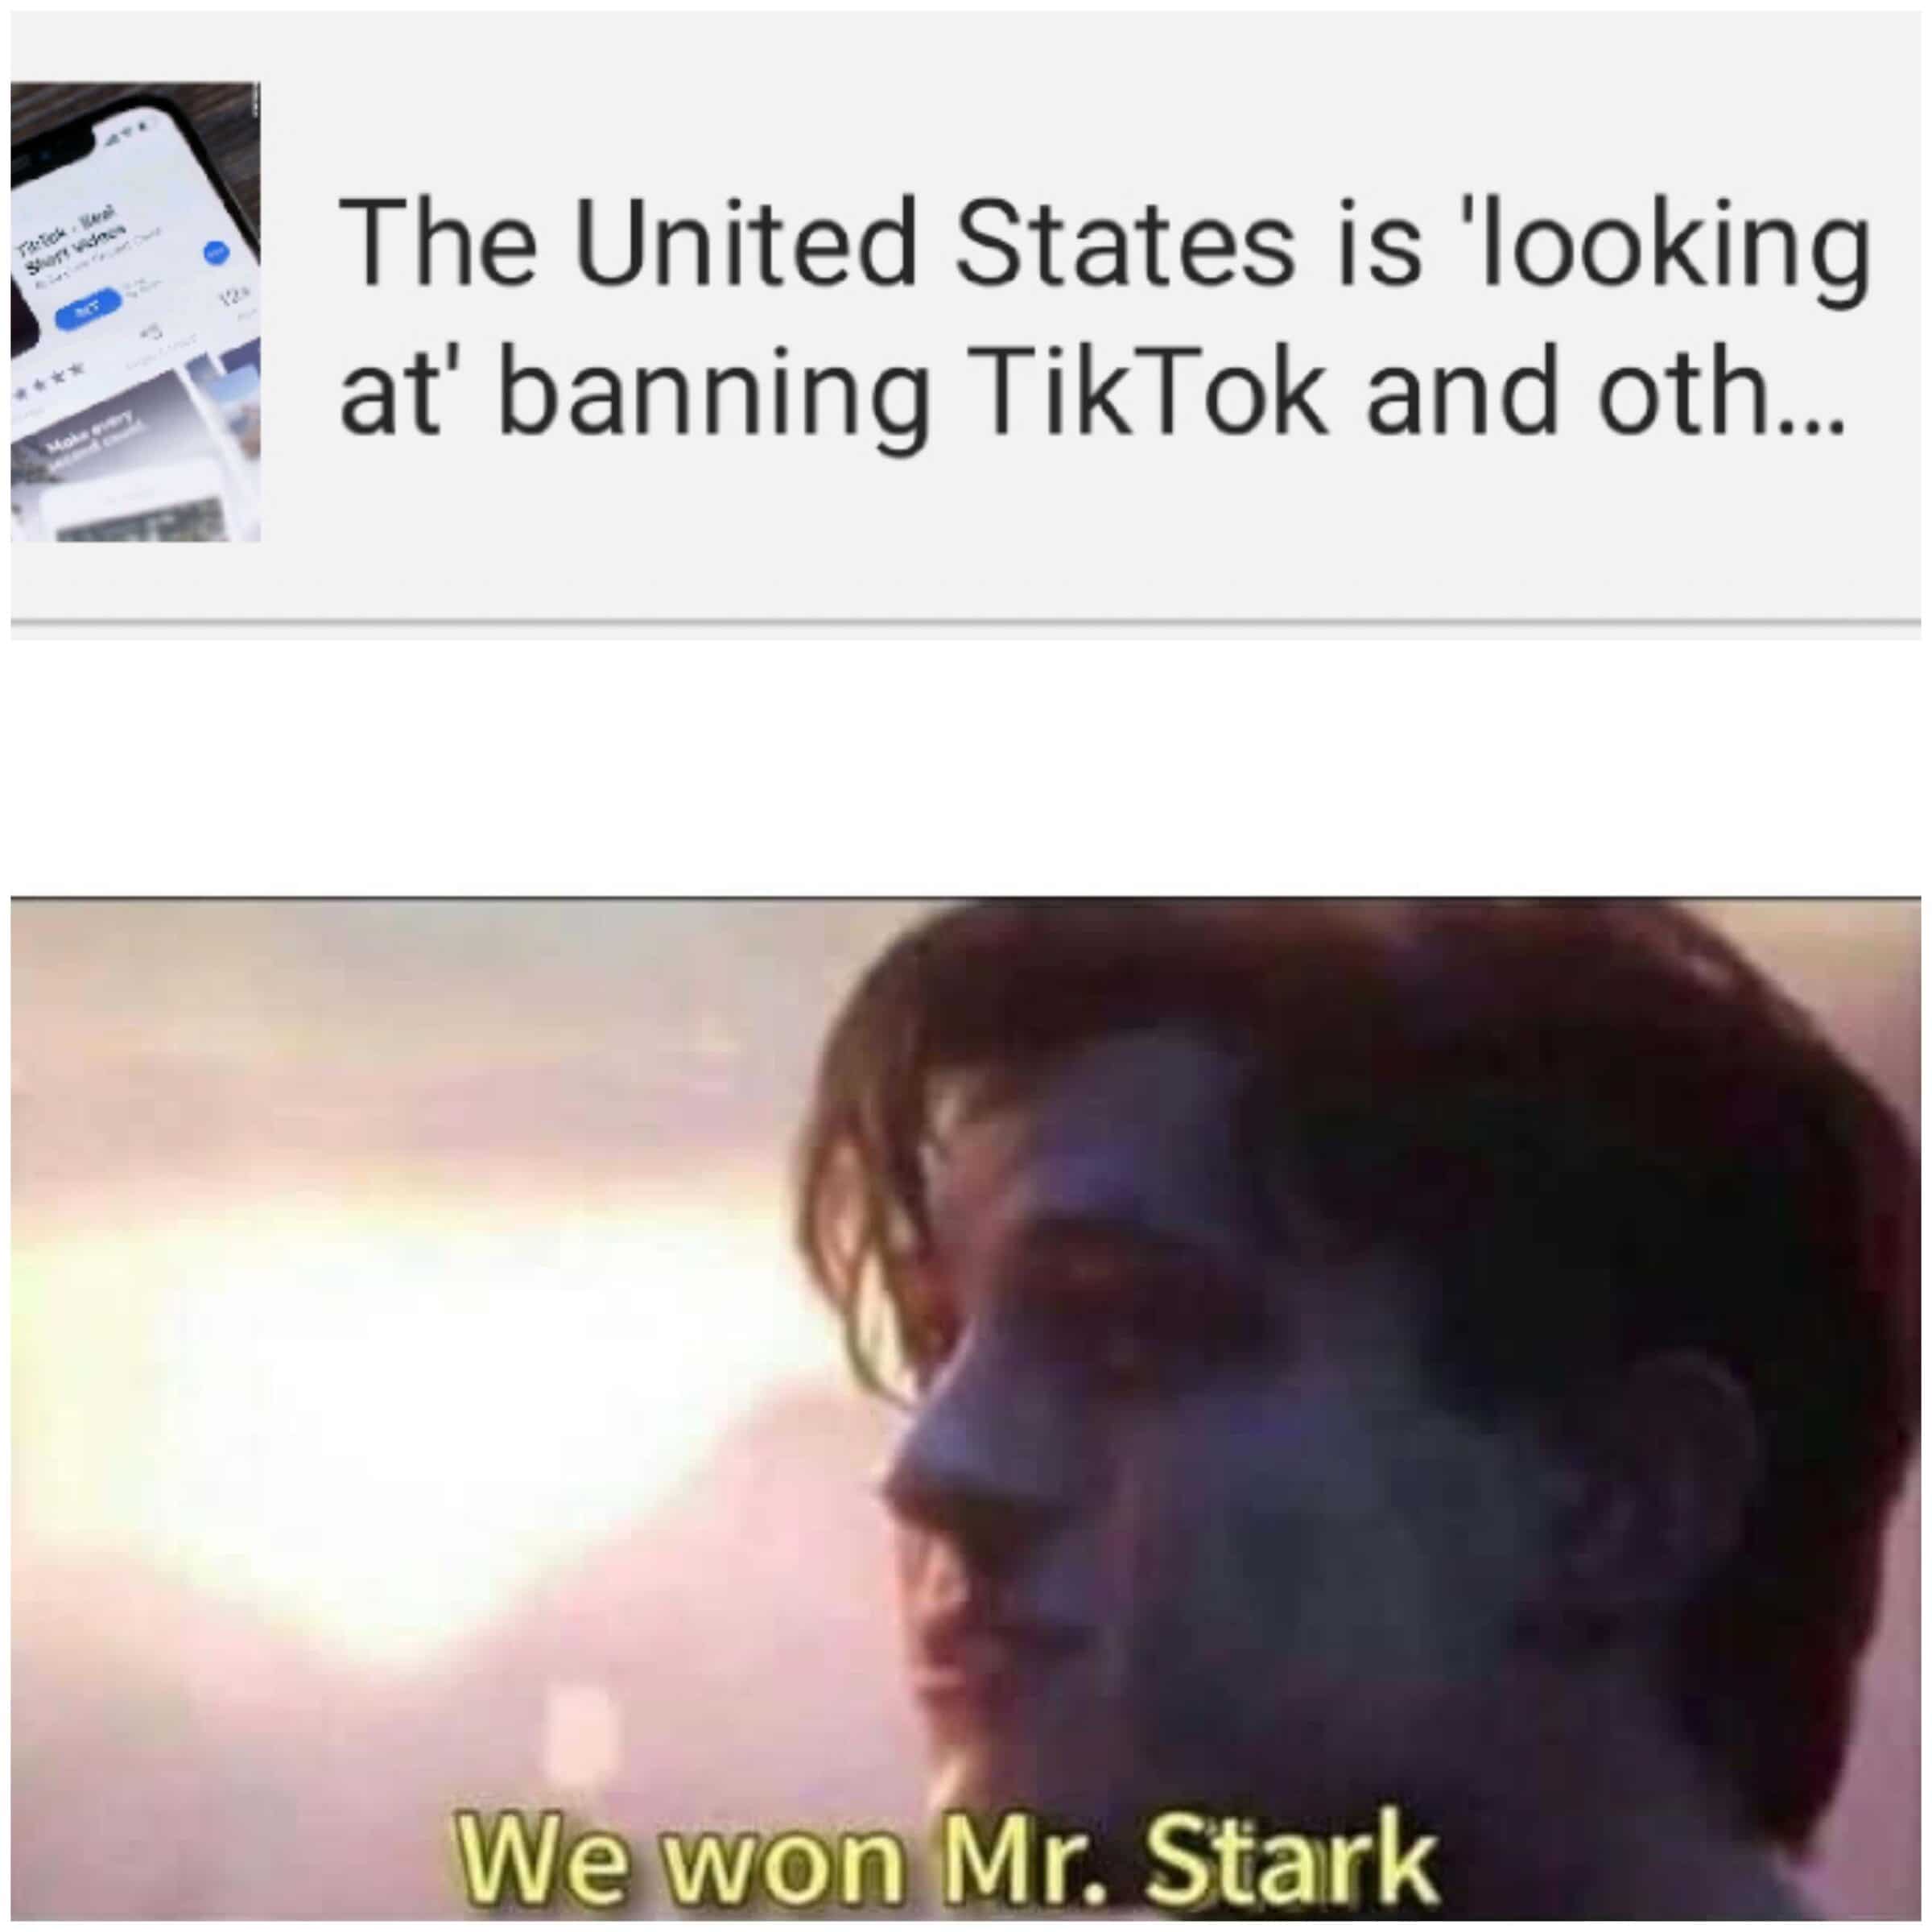 Dank, VPN, Tik Tok, TikTok, Reddit, Indian other memes Dank, VPN, Tik Tok, TikTok, Reddit, Indian text: The United States is 'looking at' banning TikTok and 0th... iW@Wöfi Mr. Stark 